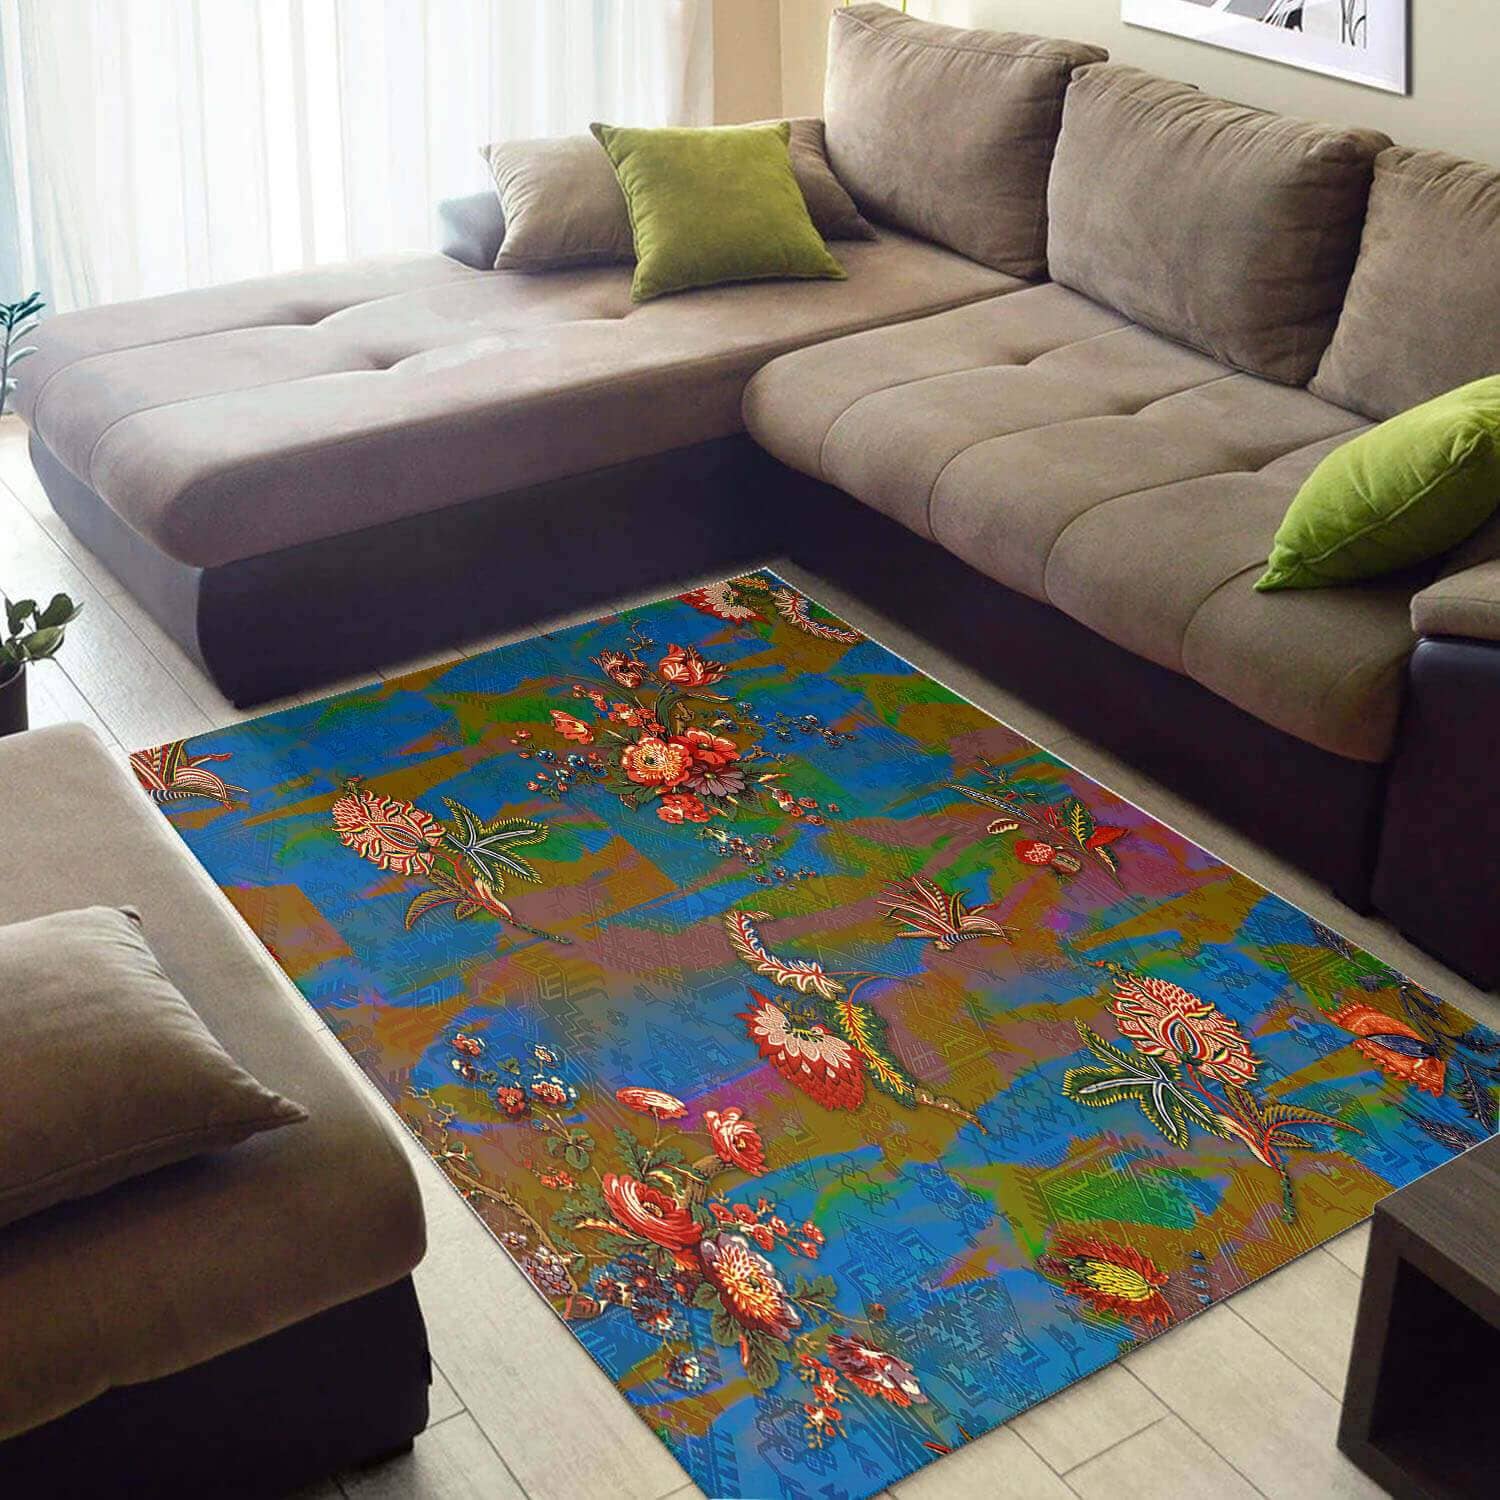 Cool African Modern American Black Art Ethnic Seamless Pattern Large Inspired Living Room Rug